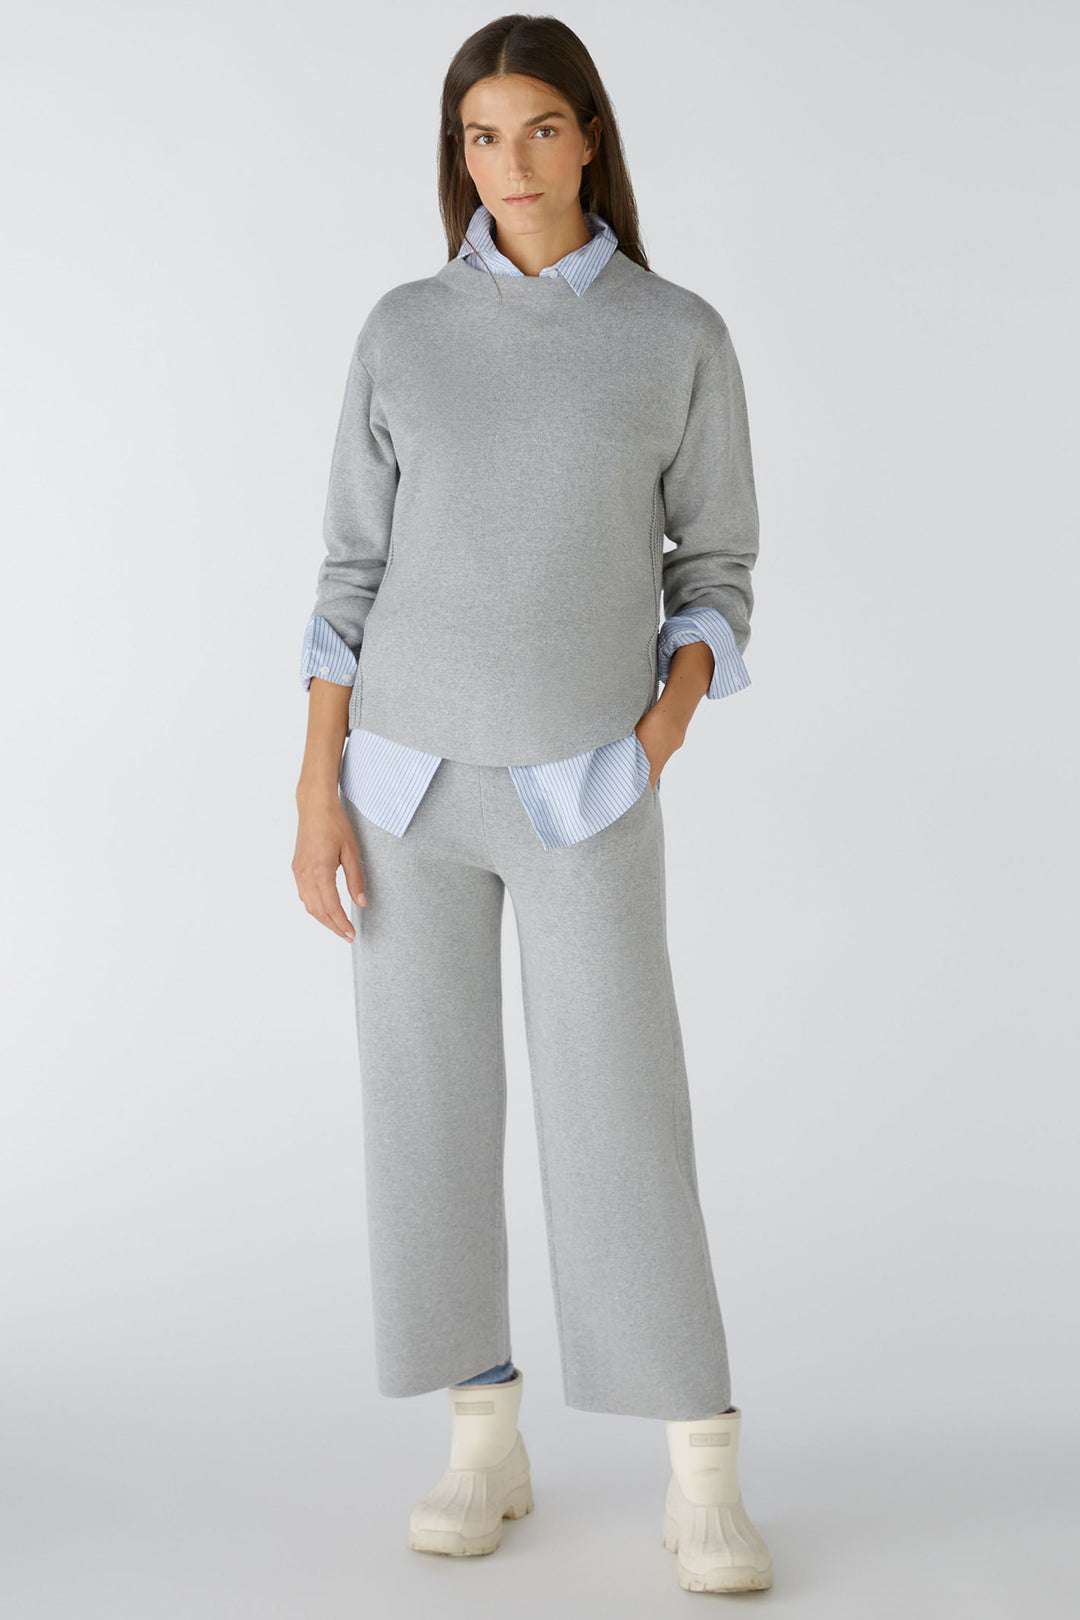 Oui 85753 Light Grey Pull-On Wide Leg Cropped Trousers - Olivia Grace Fashion